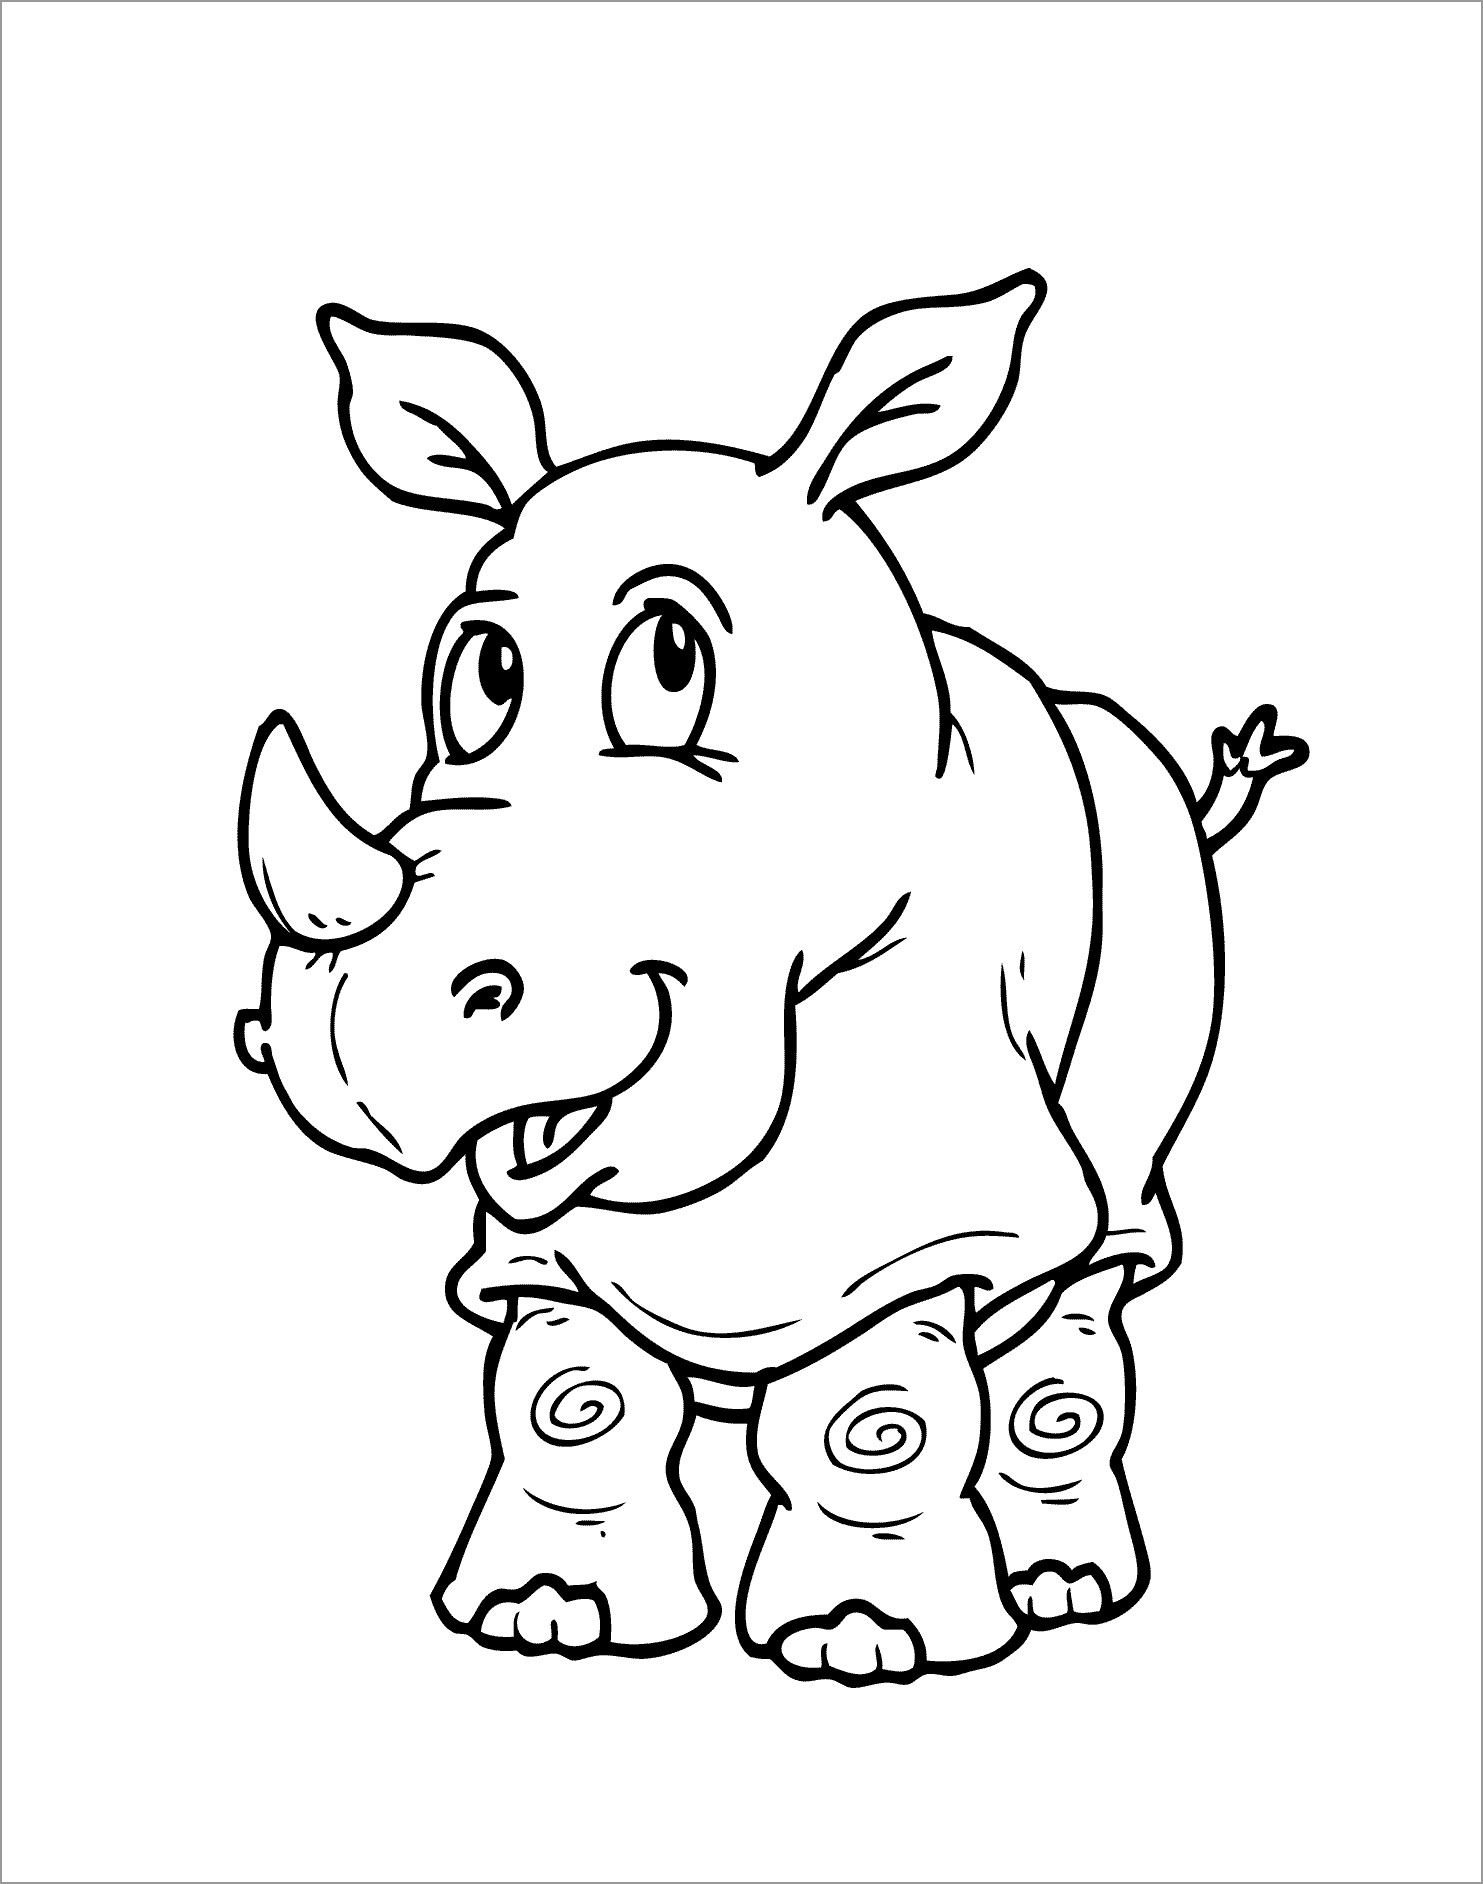 Rhino Coloring Page